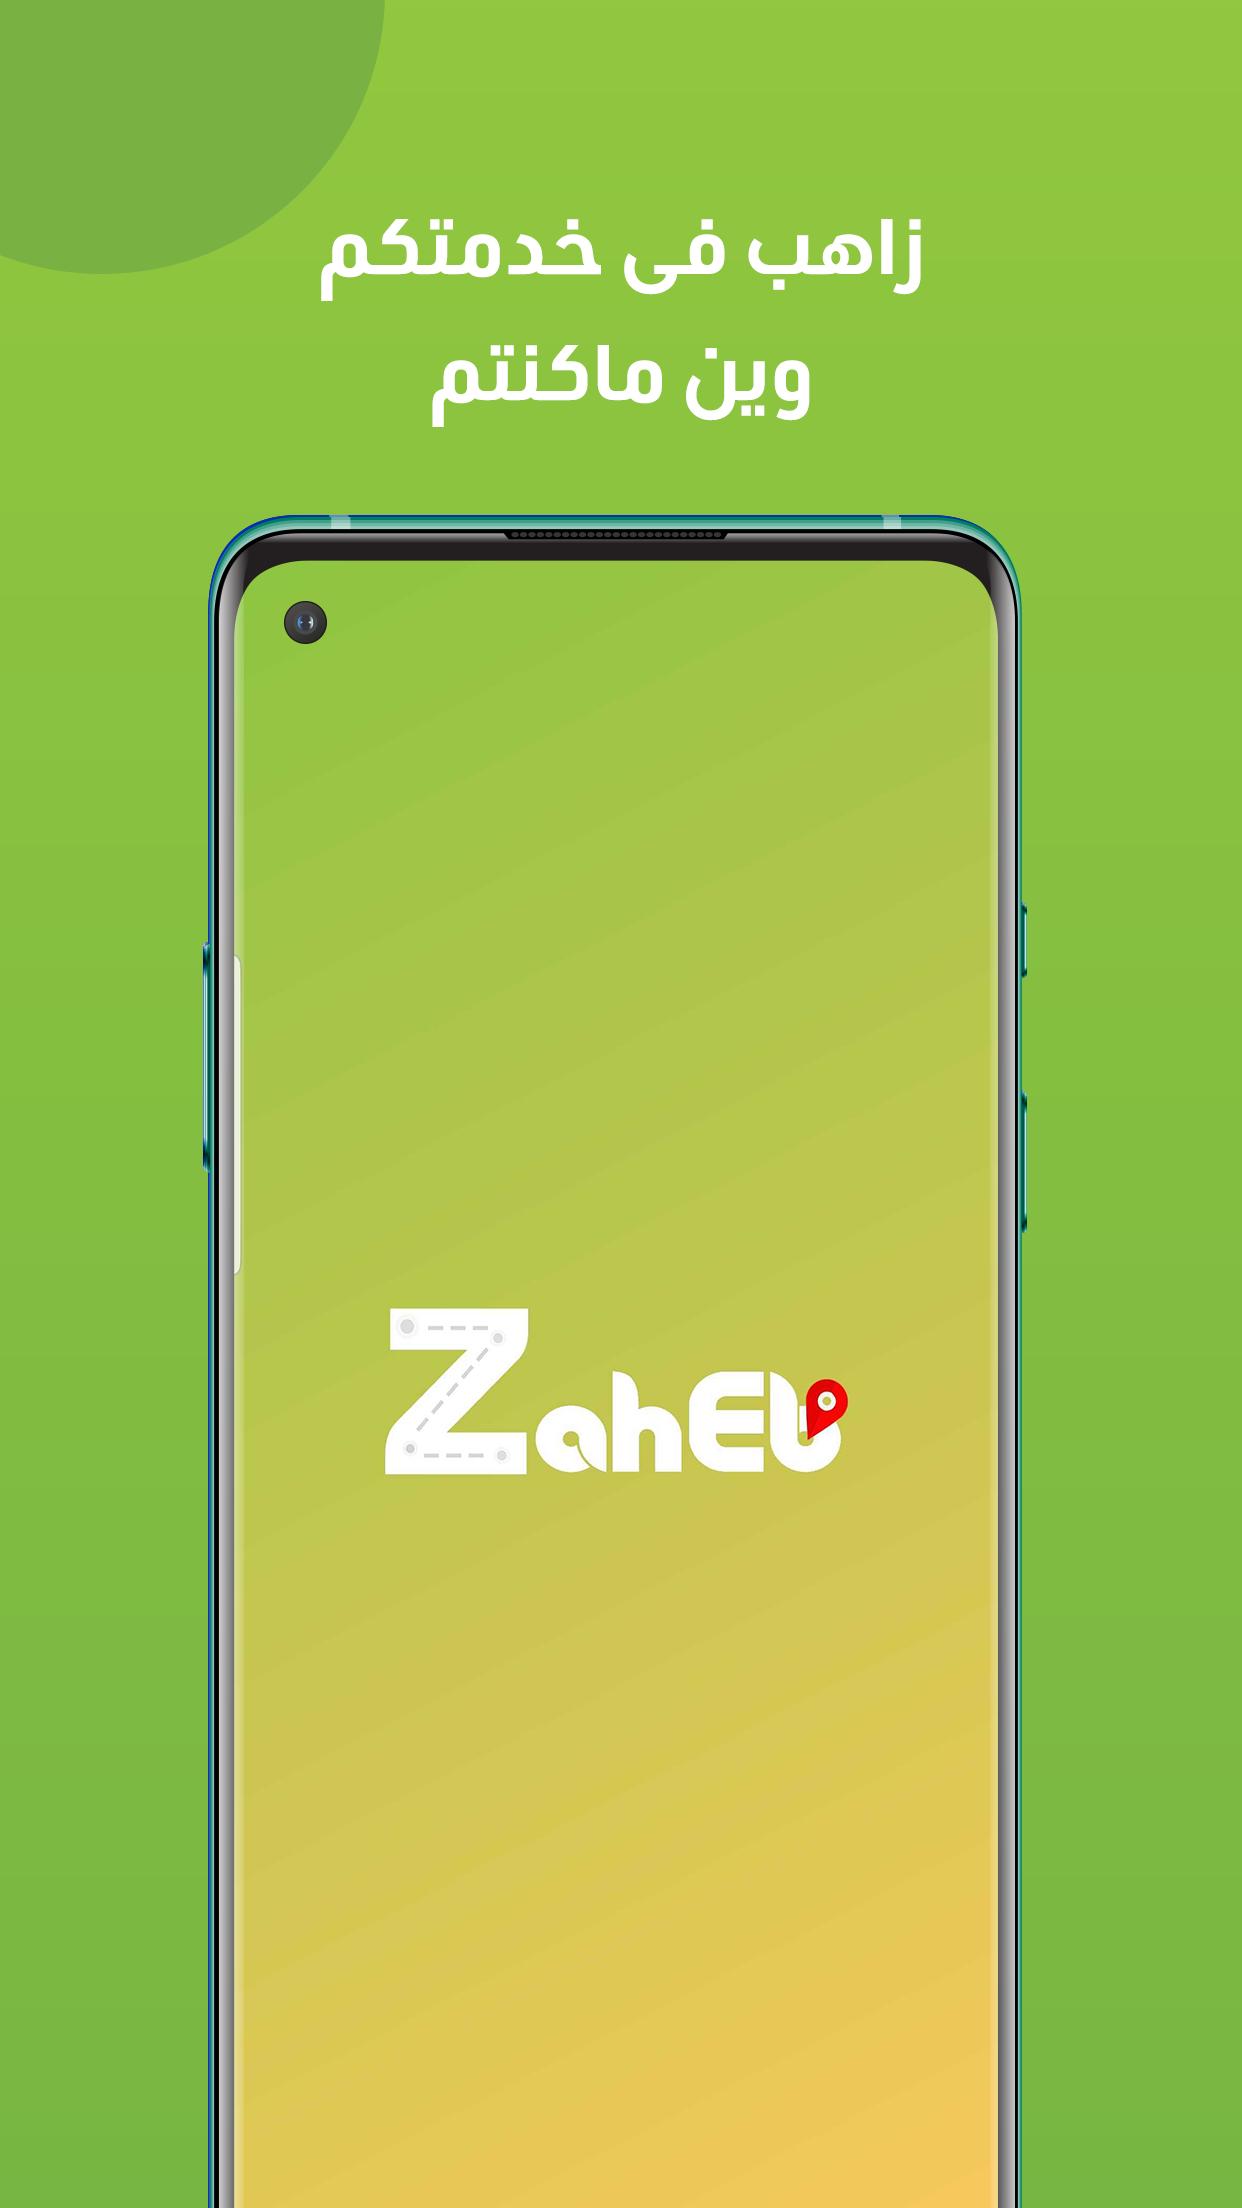 زاهب APK for Android Download